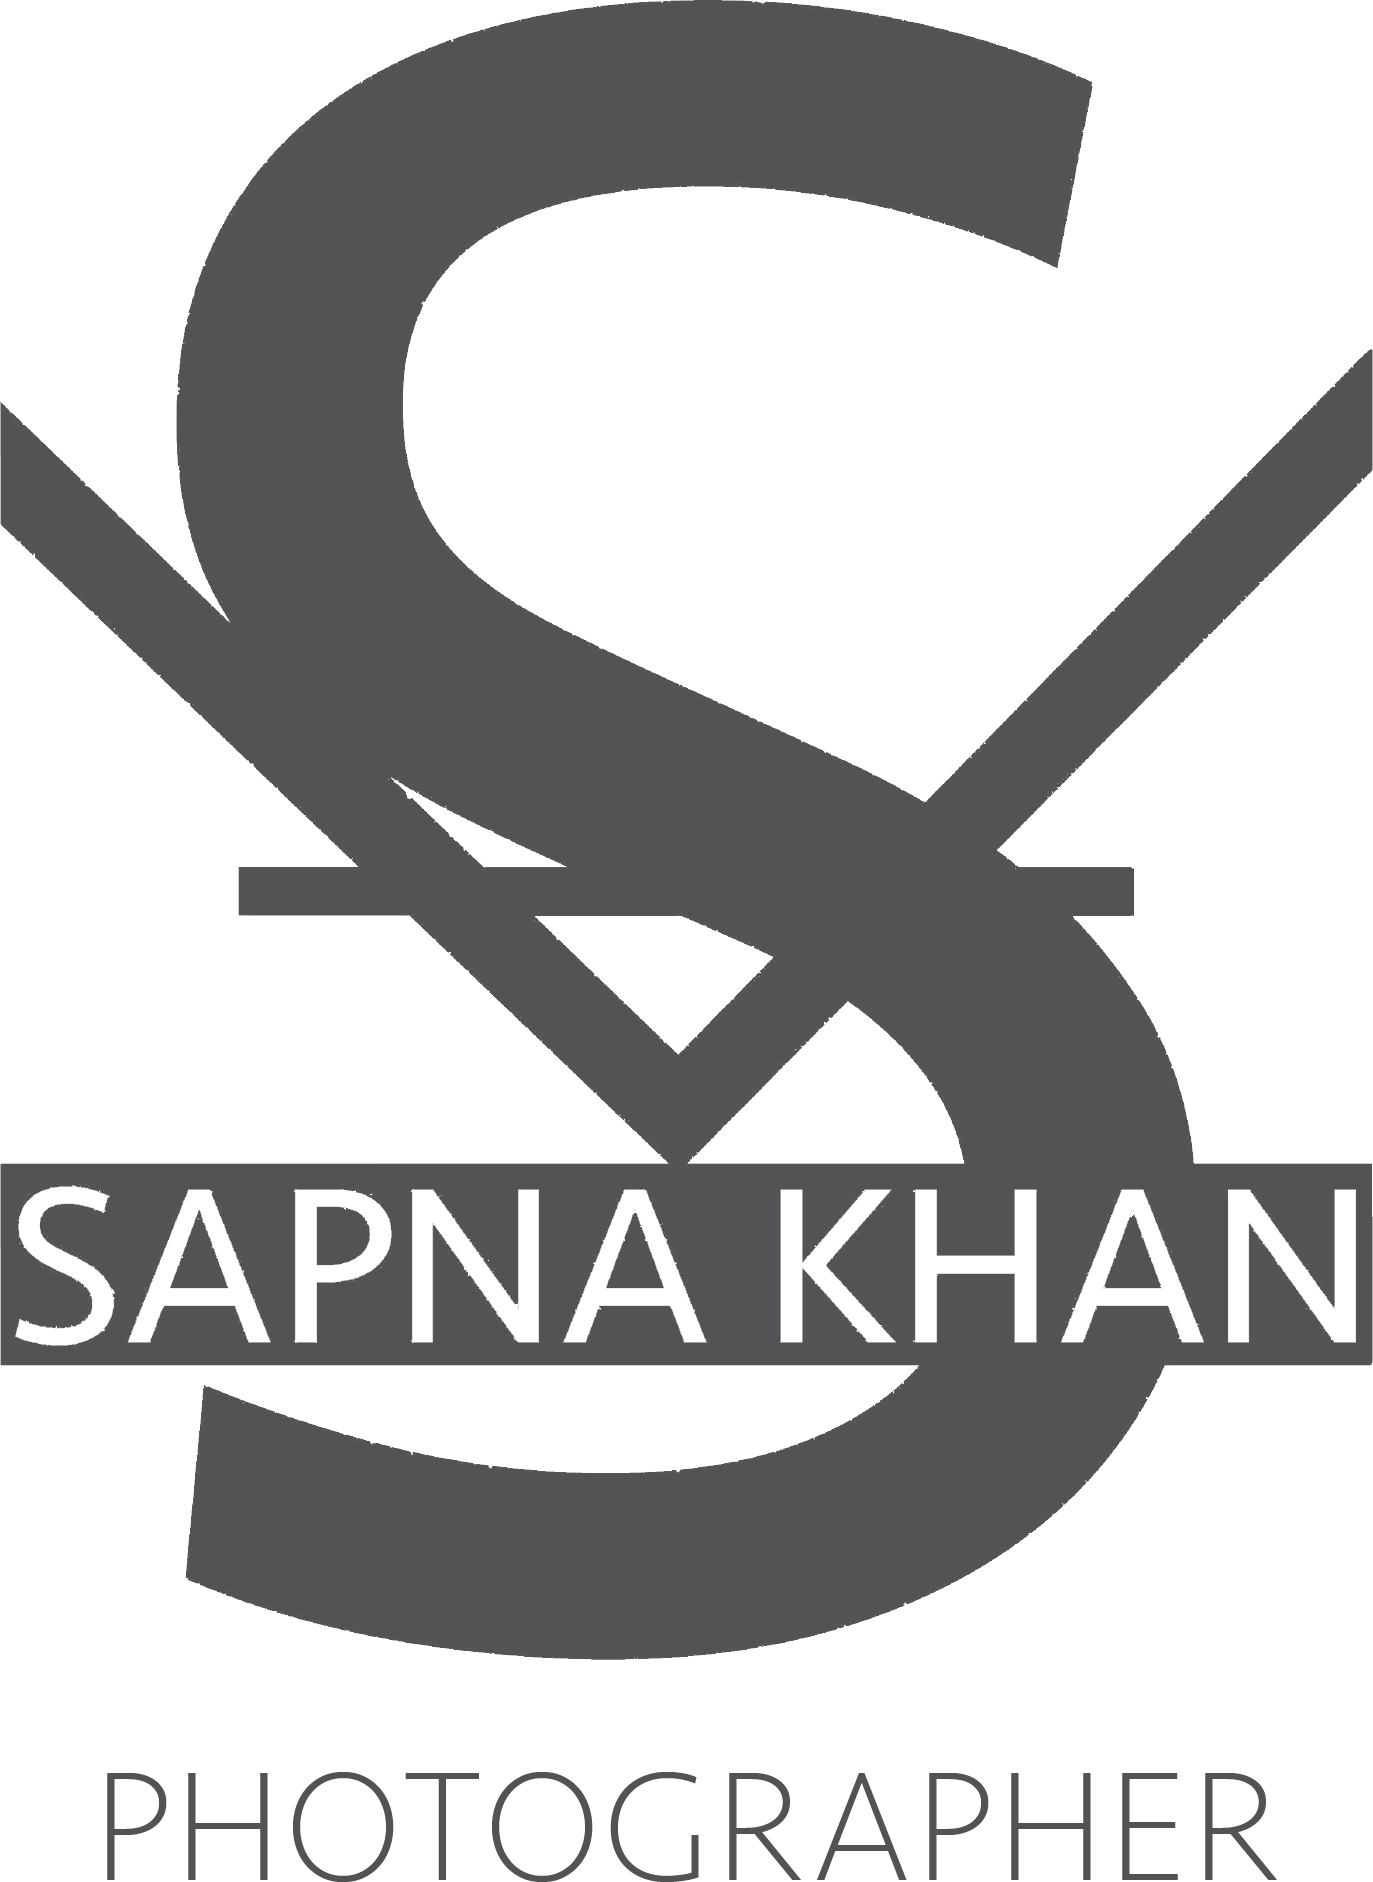 Sapna Khan - Photographer